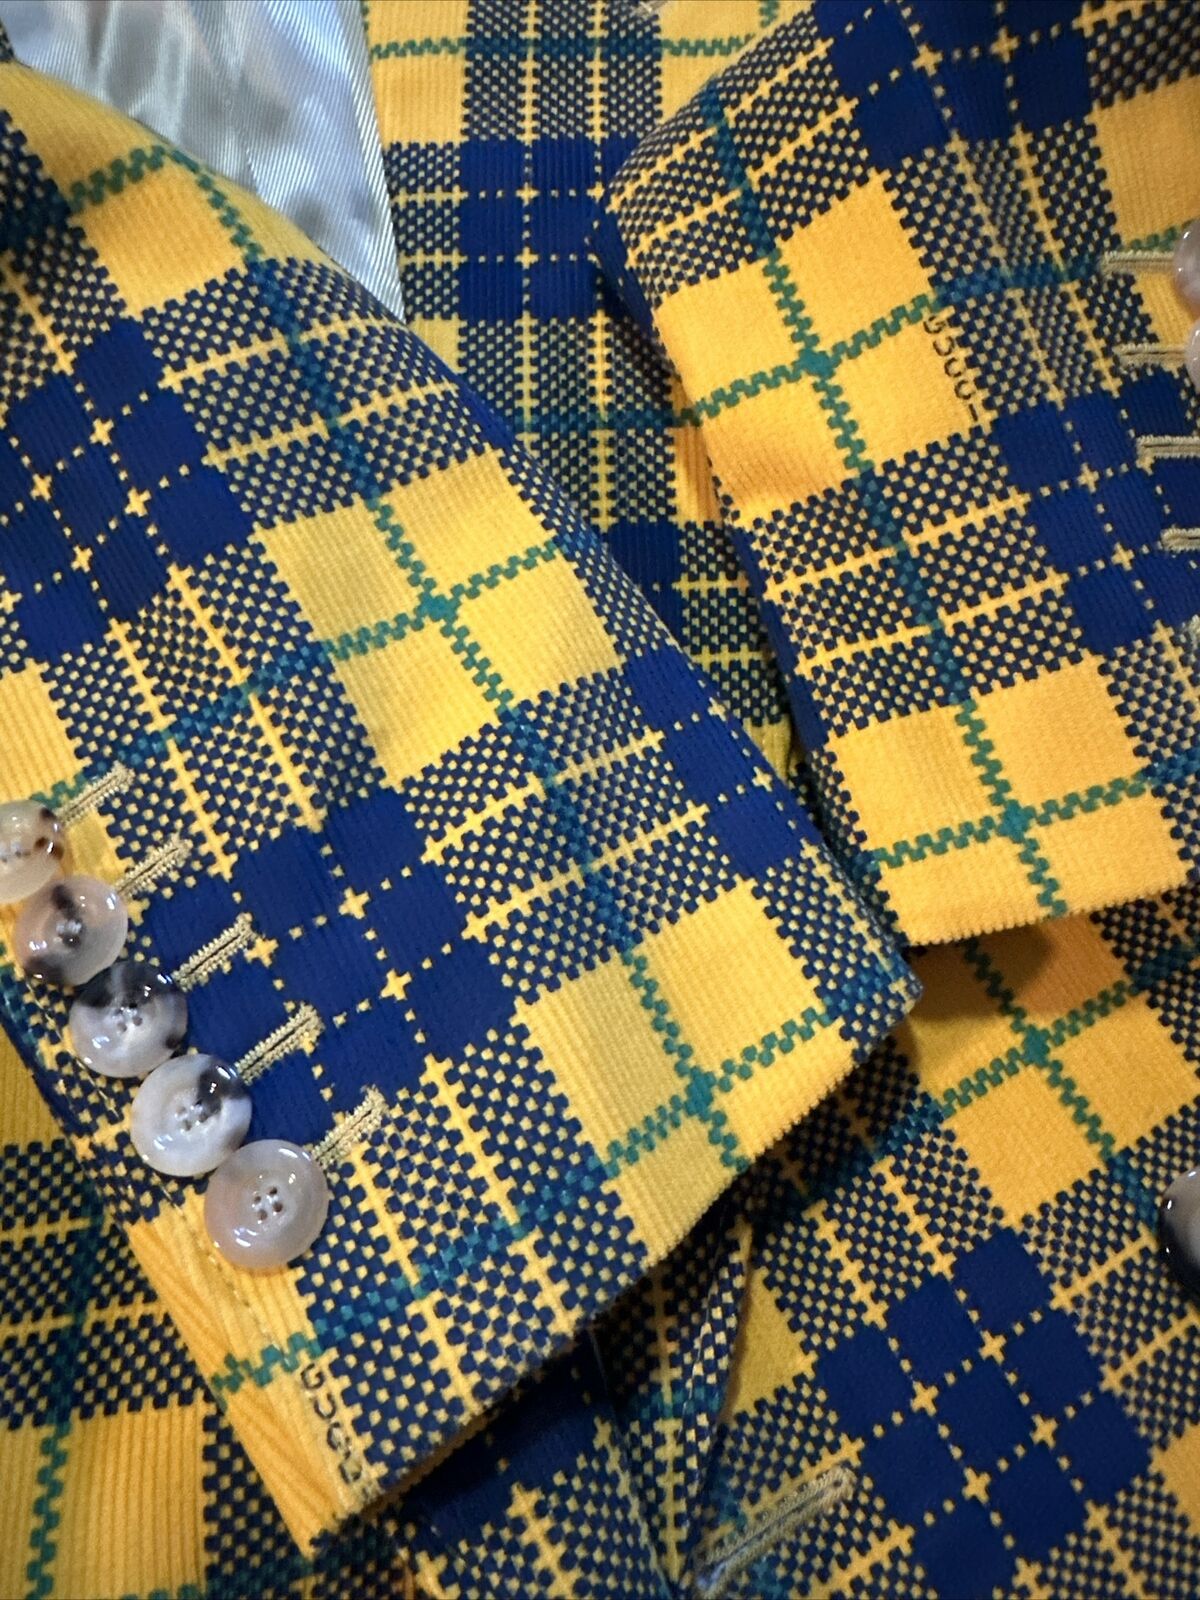 Gucci Men Tartan Cotton Sport Coat Blazer Yellow/Black/Gr. 38 US/48 Eu NET $3800